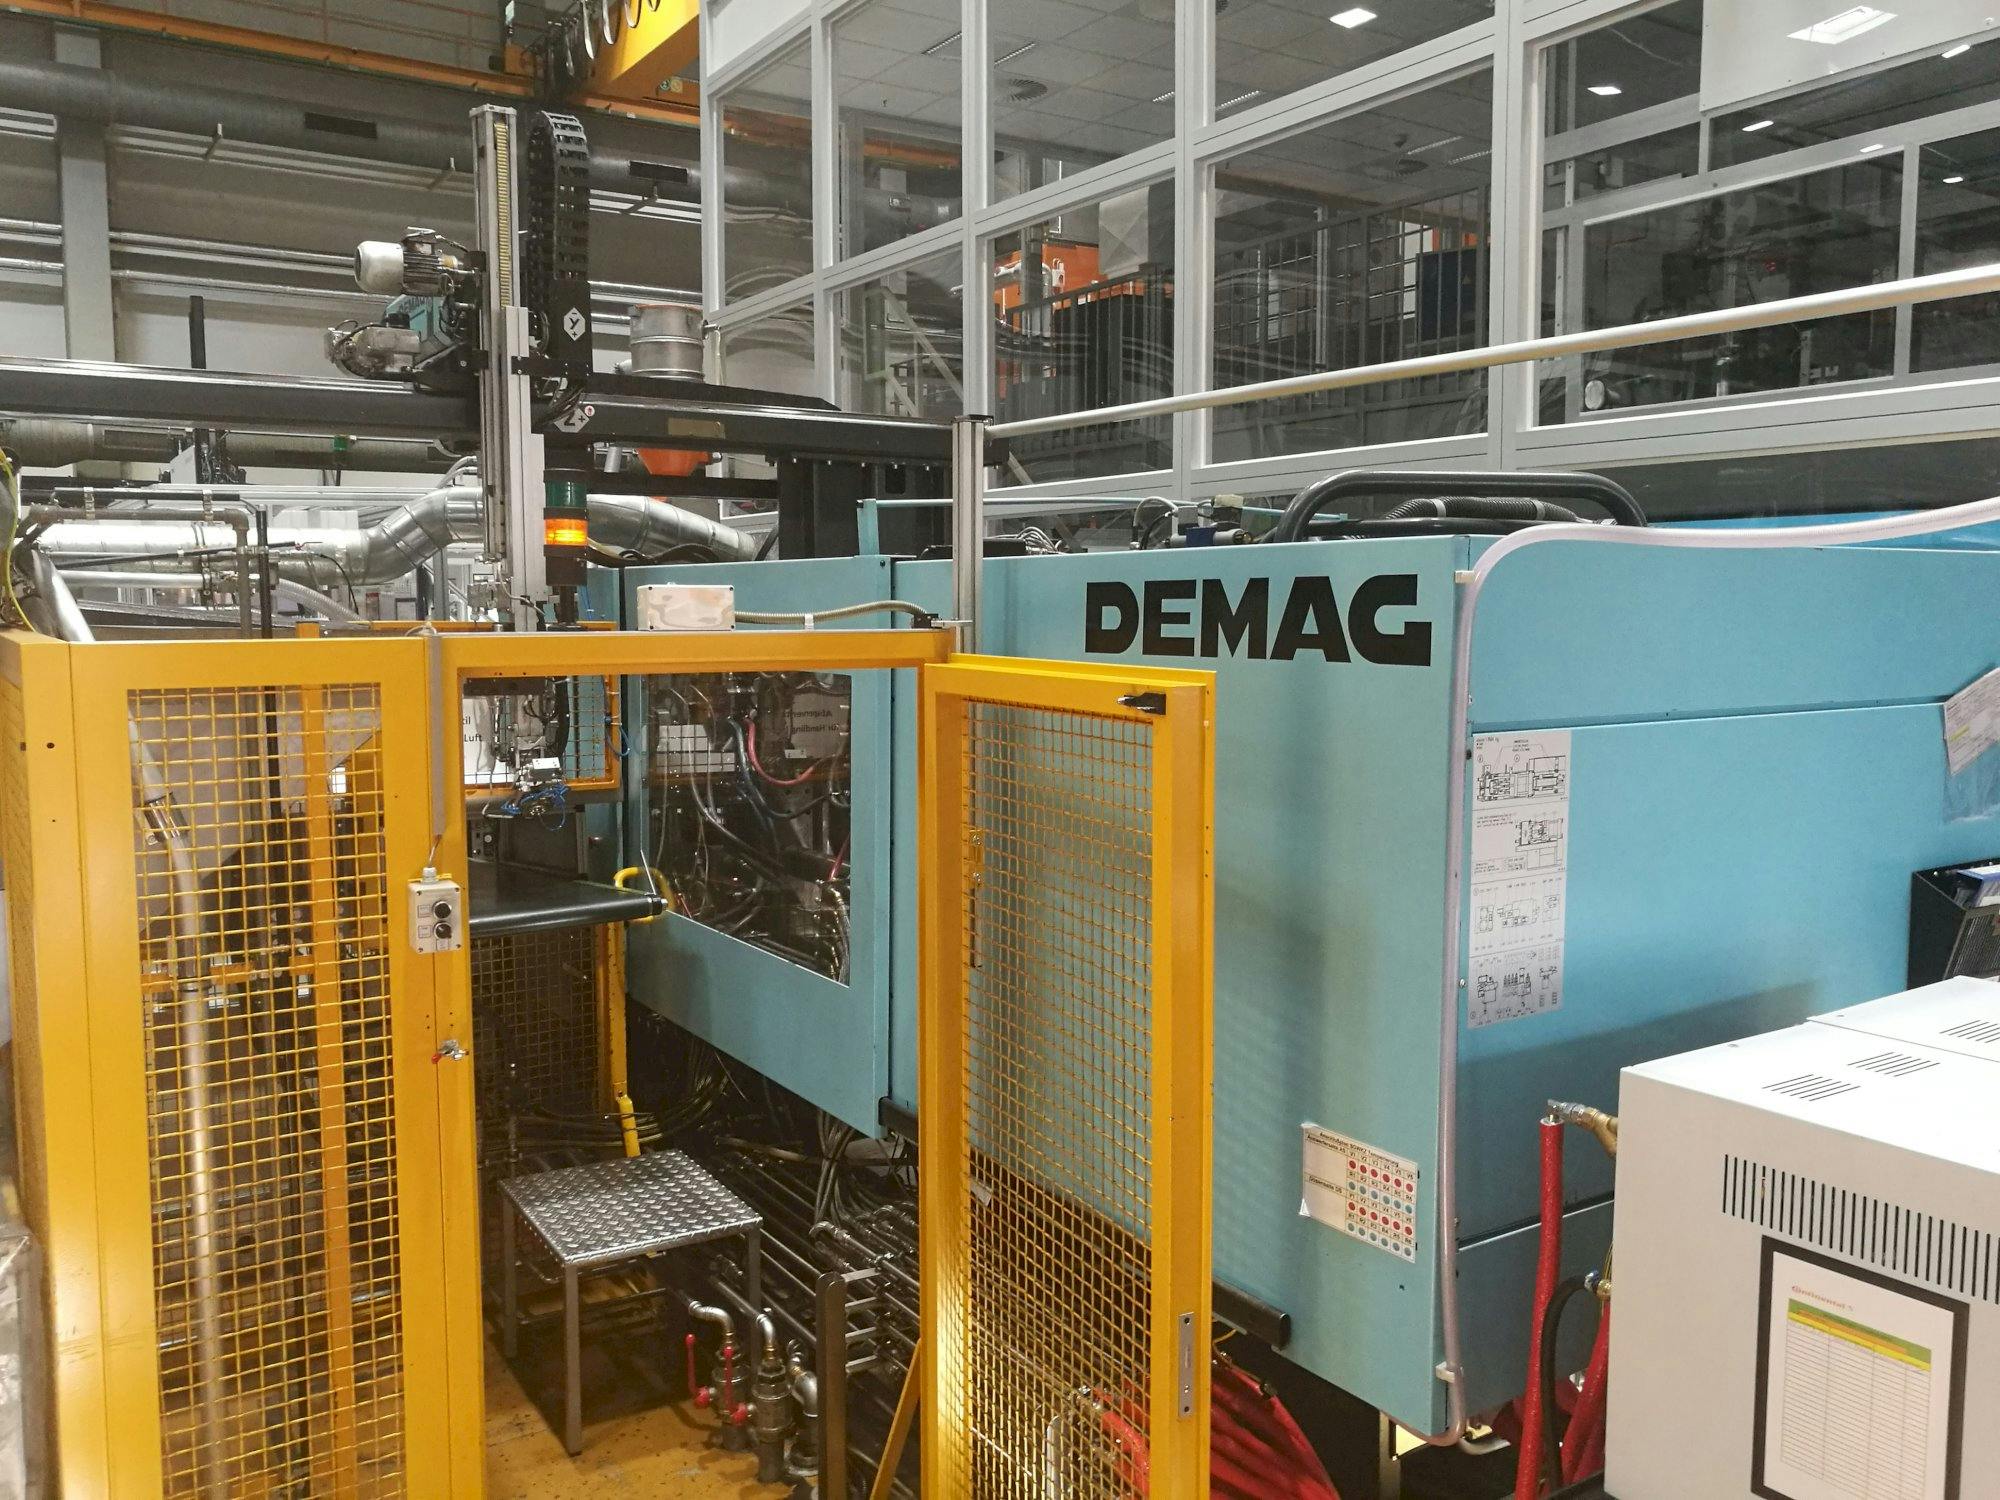 Detalle de la máquina DEMAG Ergotech 330-2300